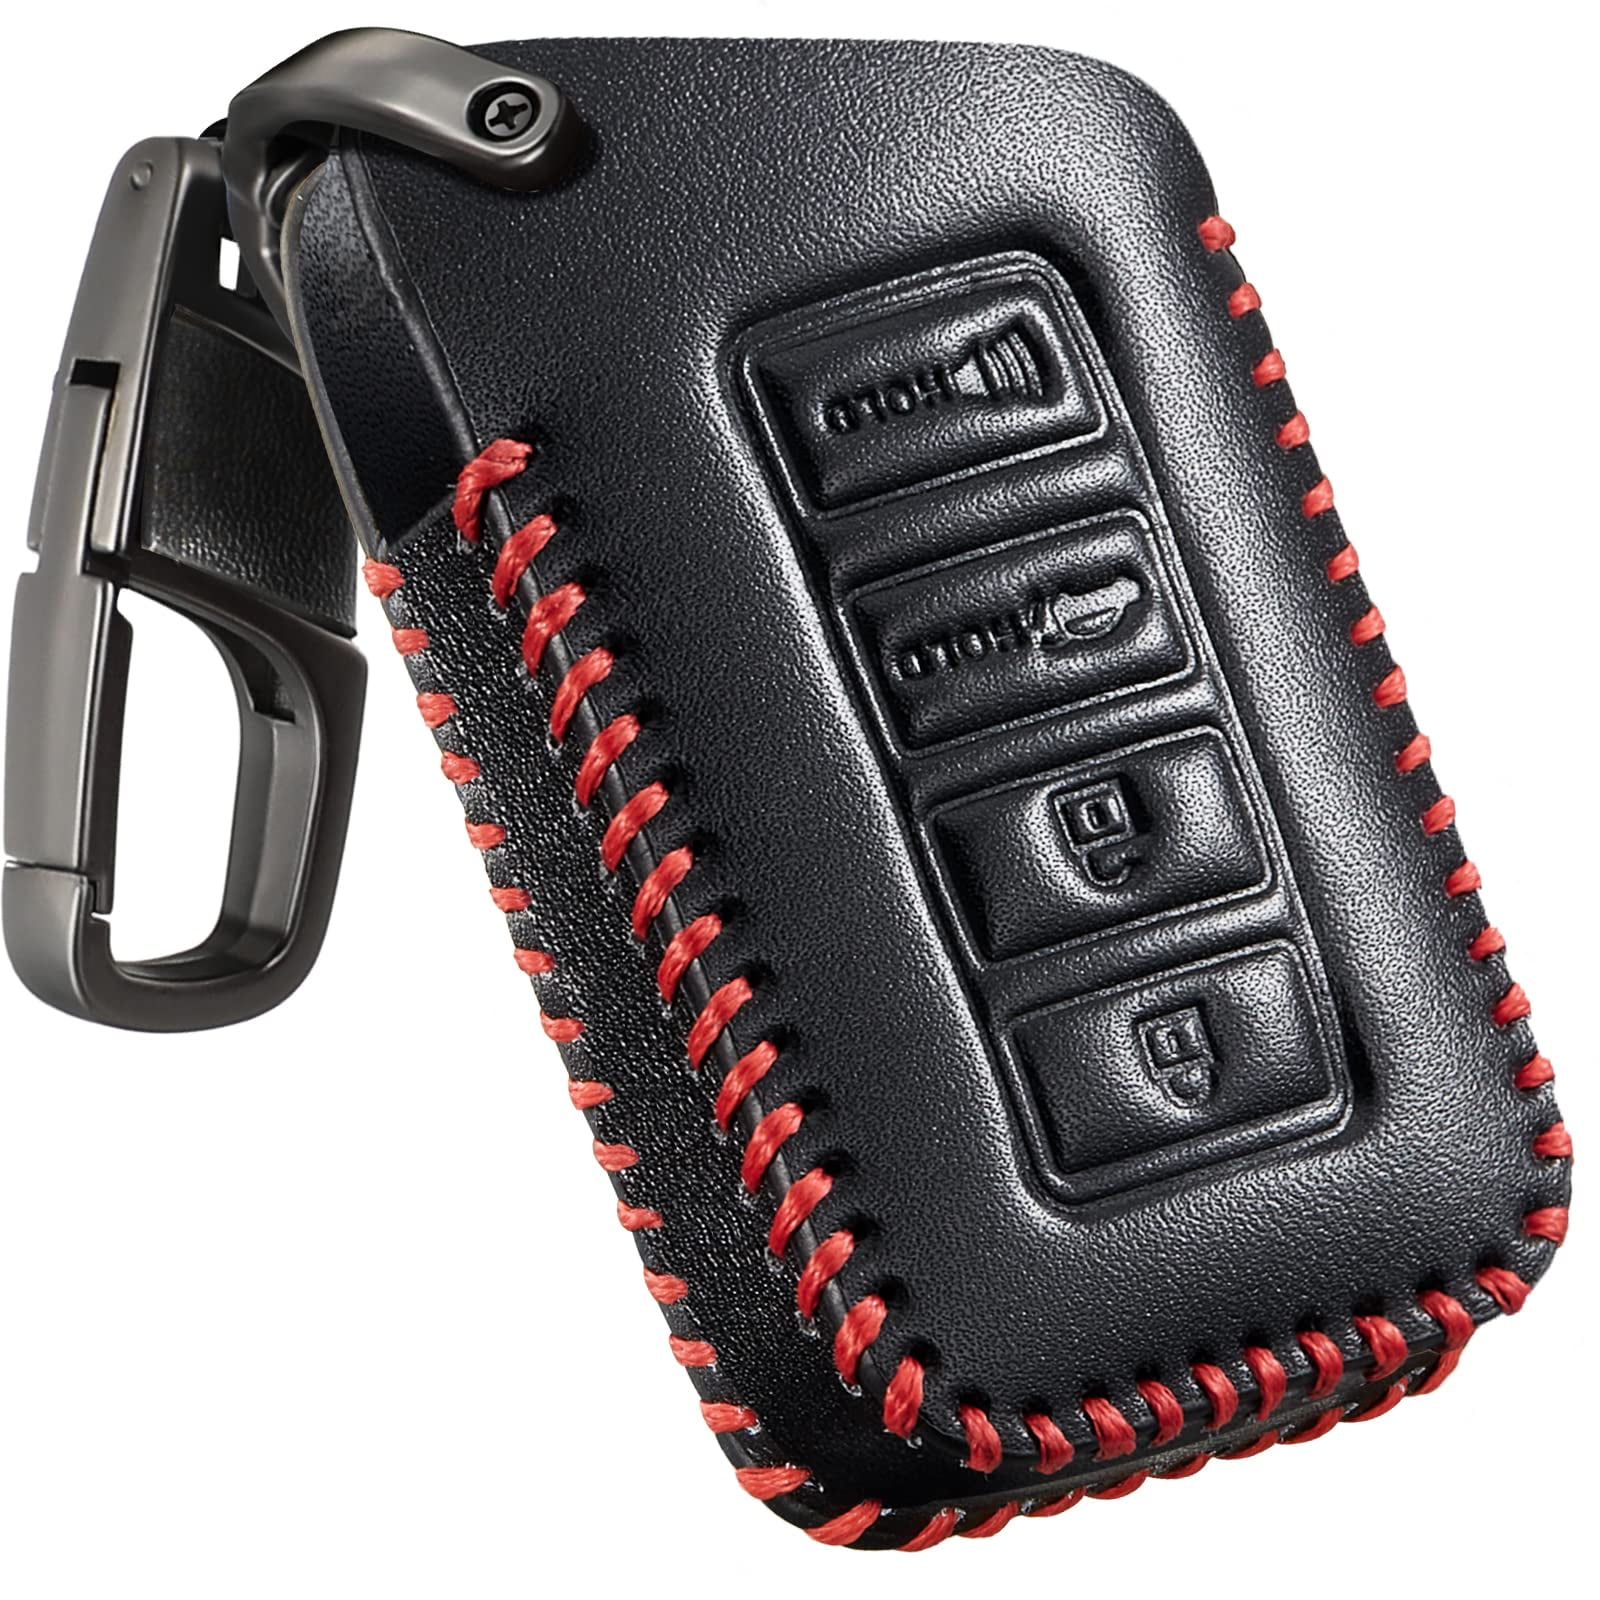 Slohif for Lexus Key Fob Cover Keychain Accessories for ES GS NX LS RX RC GX F 300 300h 350 200t 450h 460 600h 4 Buttons, Leather Case+D-Ring+Hook(Black) - Walmart.com